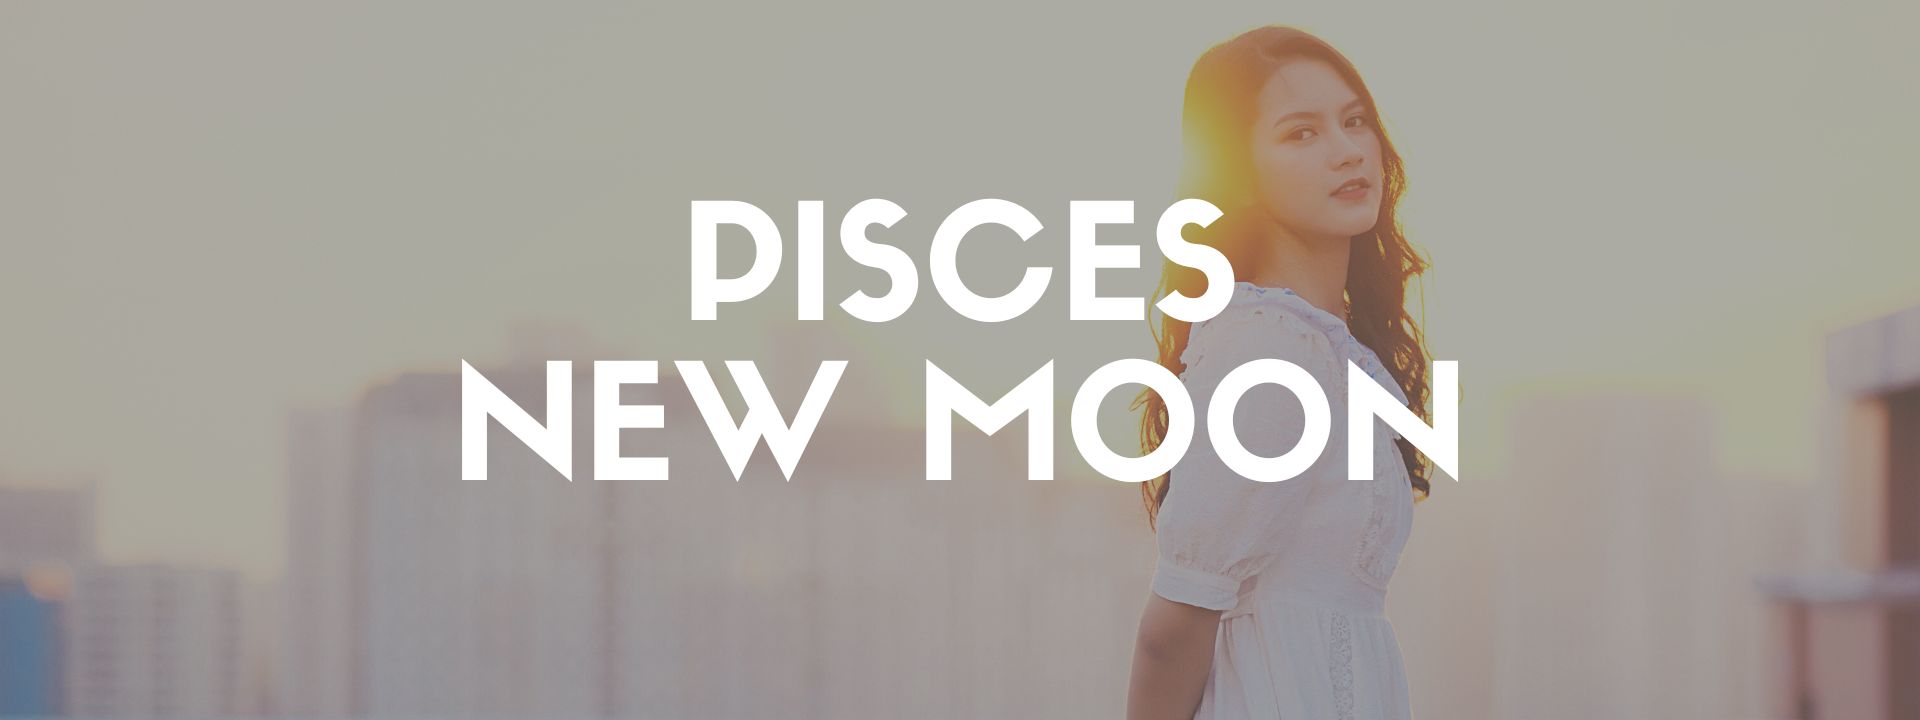 February 2023 New & Full Moons: Full Moon in Leo & New Moon in Pisces - The Dark Pixie Astrology